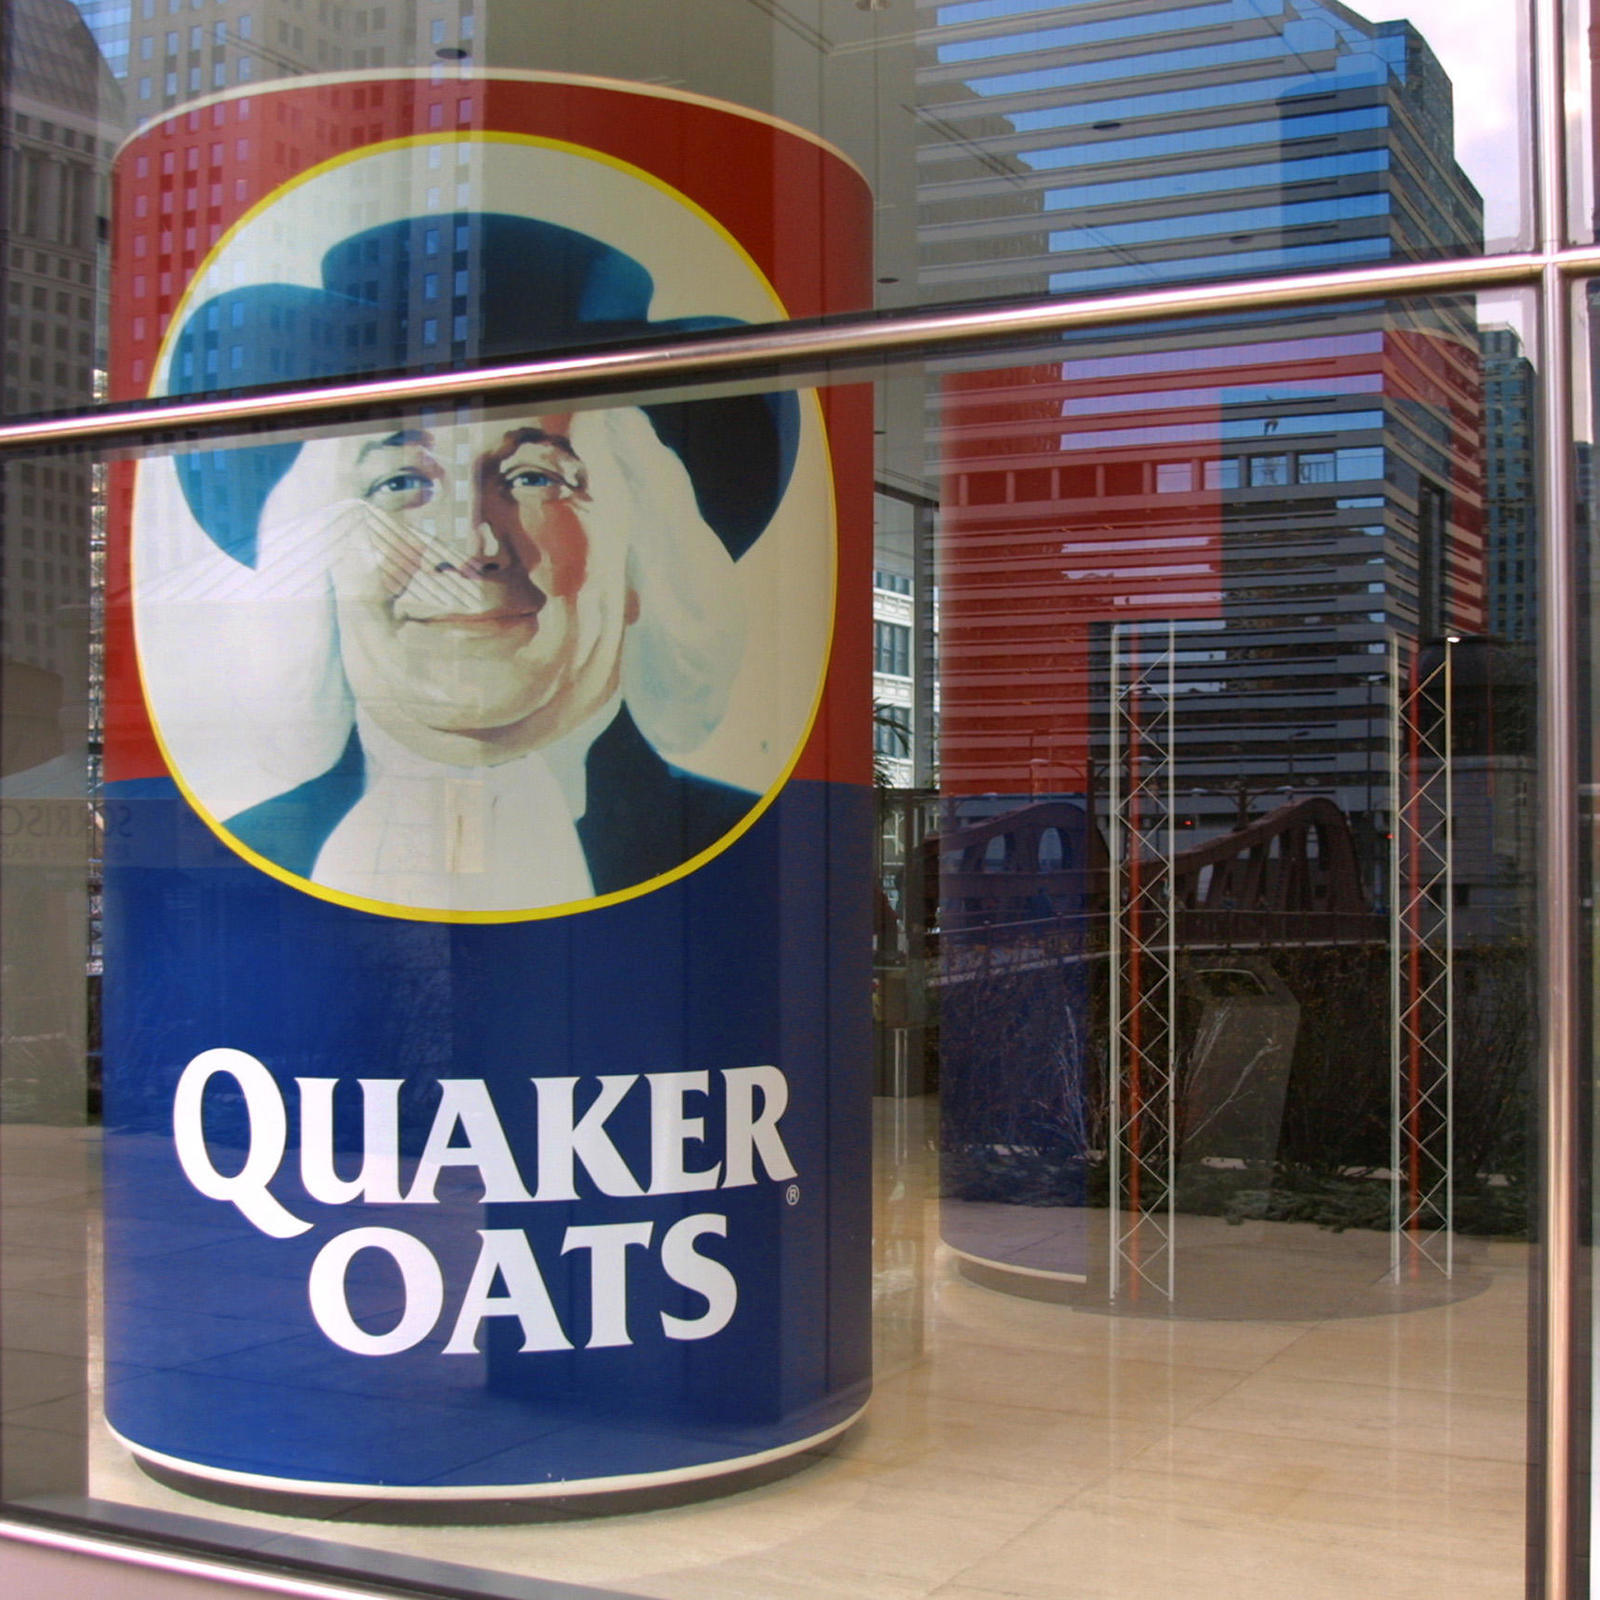 Quaker Oats recalls more granola products due to salmonella risk - CBS News